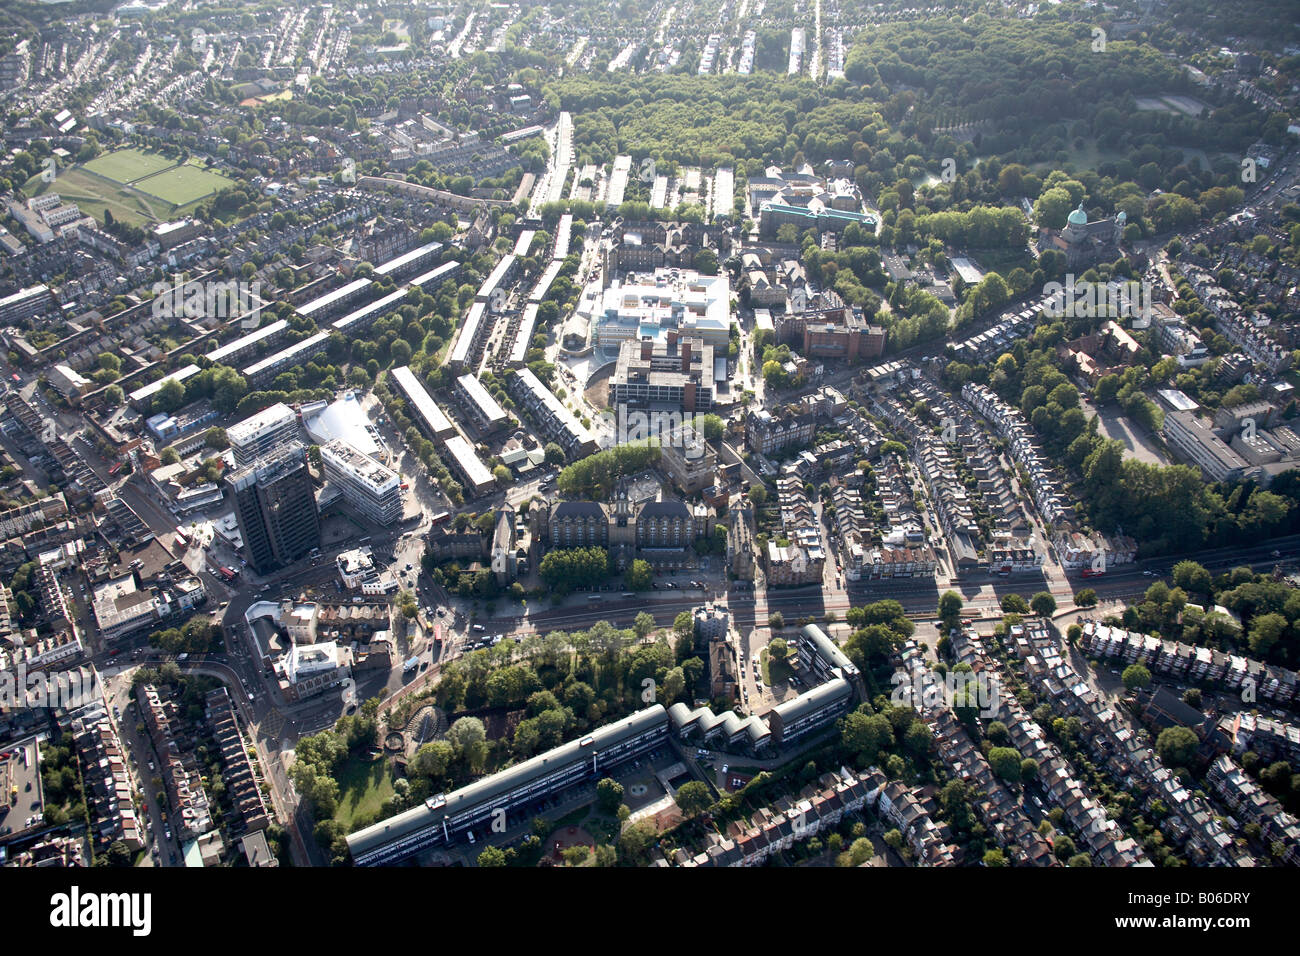 Aerial view south west ofArchway Highgate Hill Whittington Hospital Highgate Cemetery suburban housing London NW5 N19 England UK Stock Photo